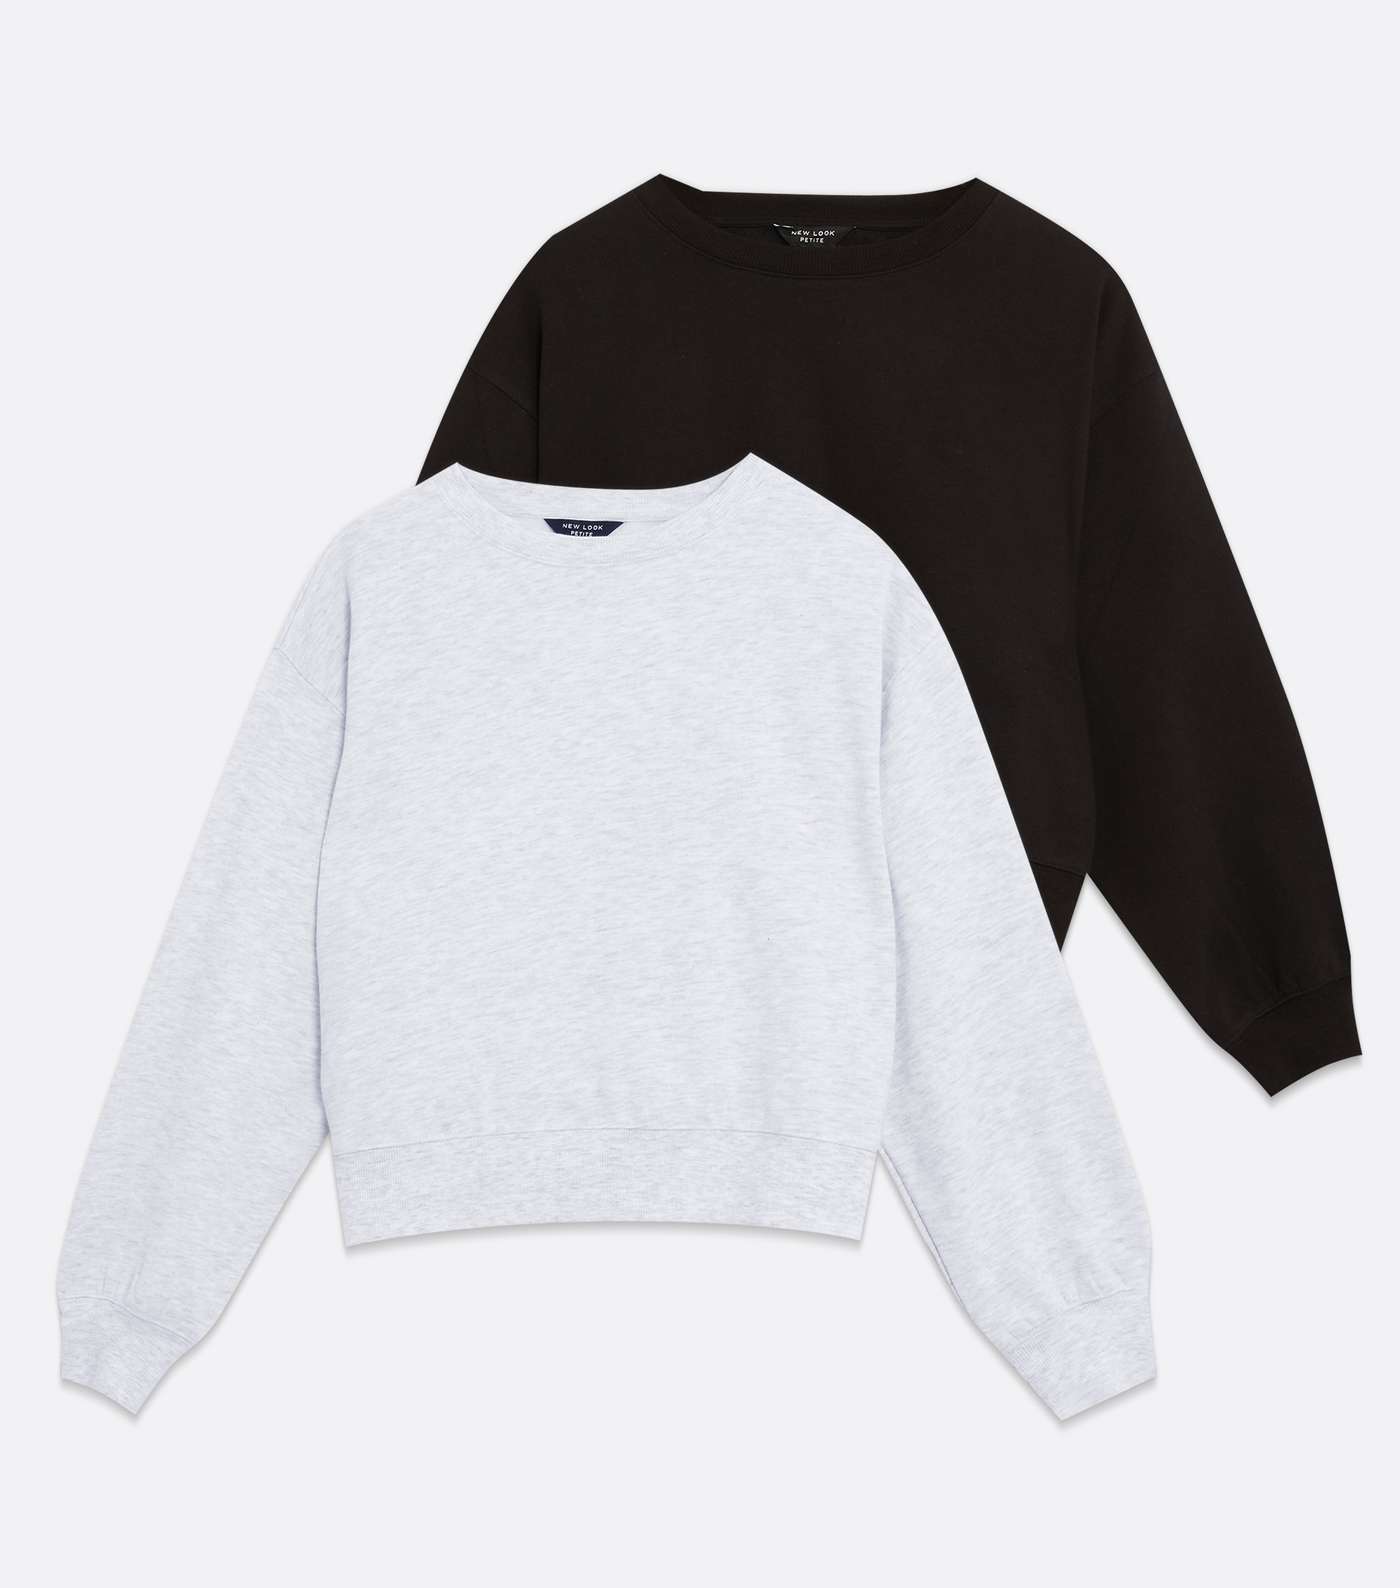 Petite 2 Pack Pale Grey and Black Crew Sweatshirts Image 5